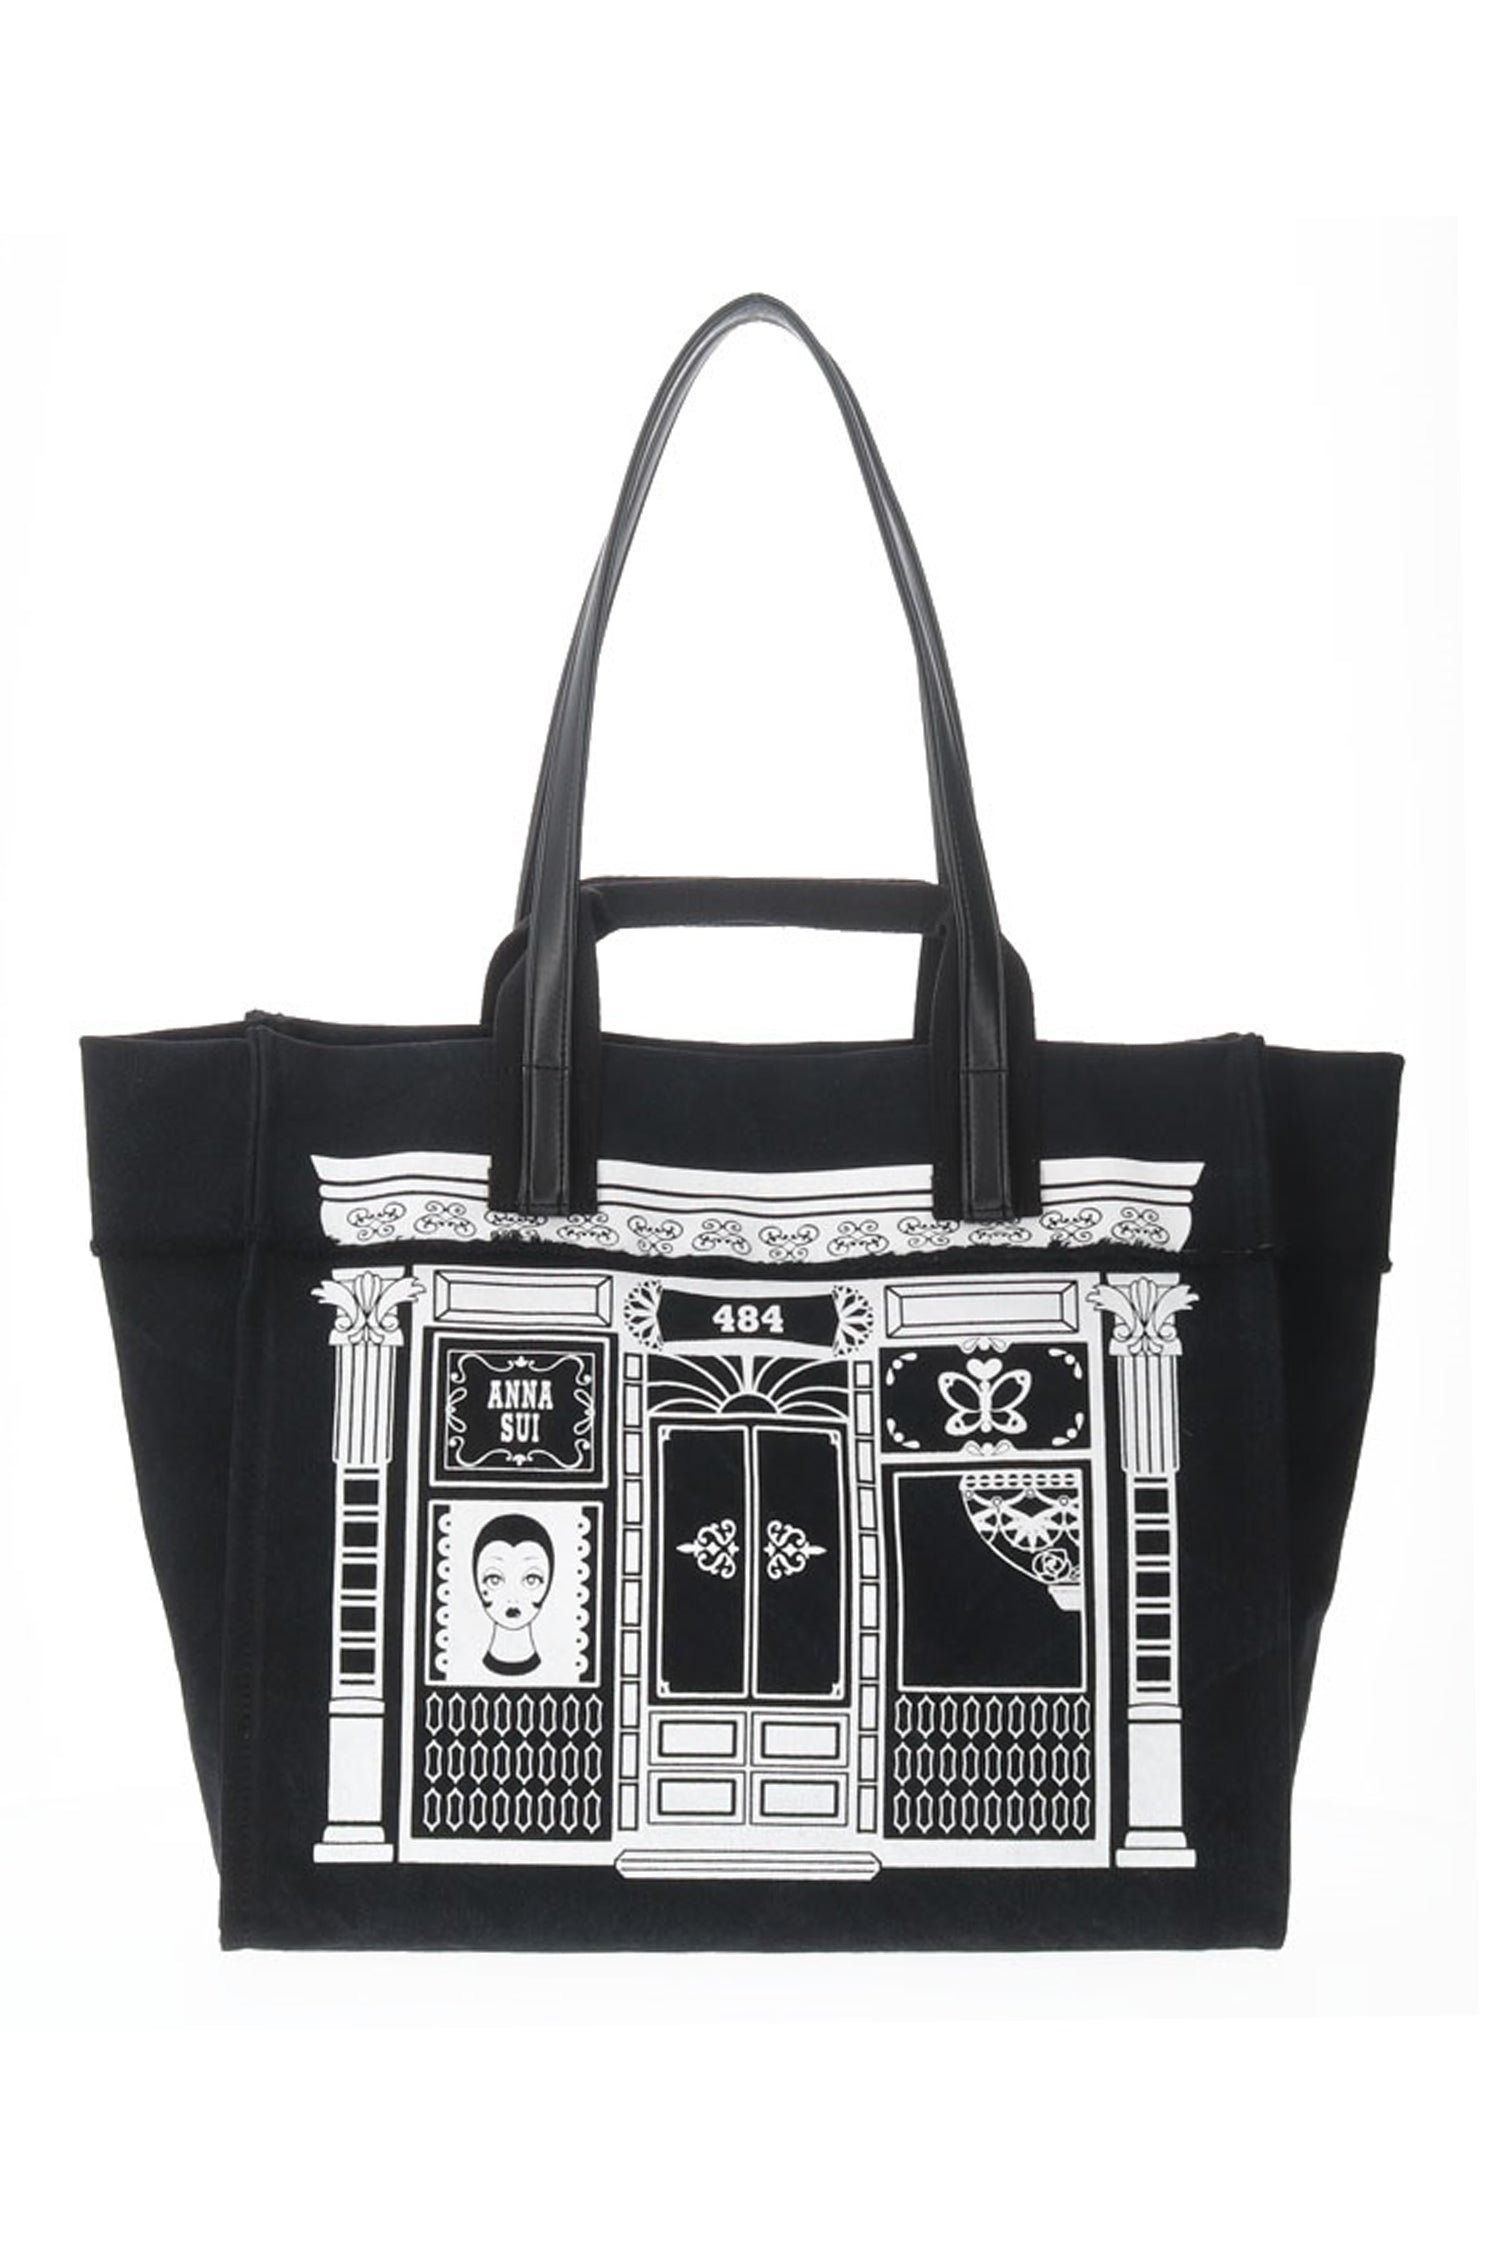 Limited Edition: Anna Sui Soho Boutique Tote Bag Black Multi